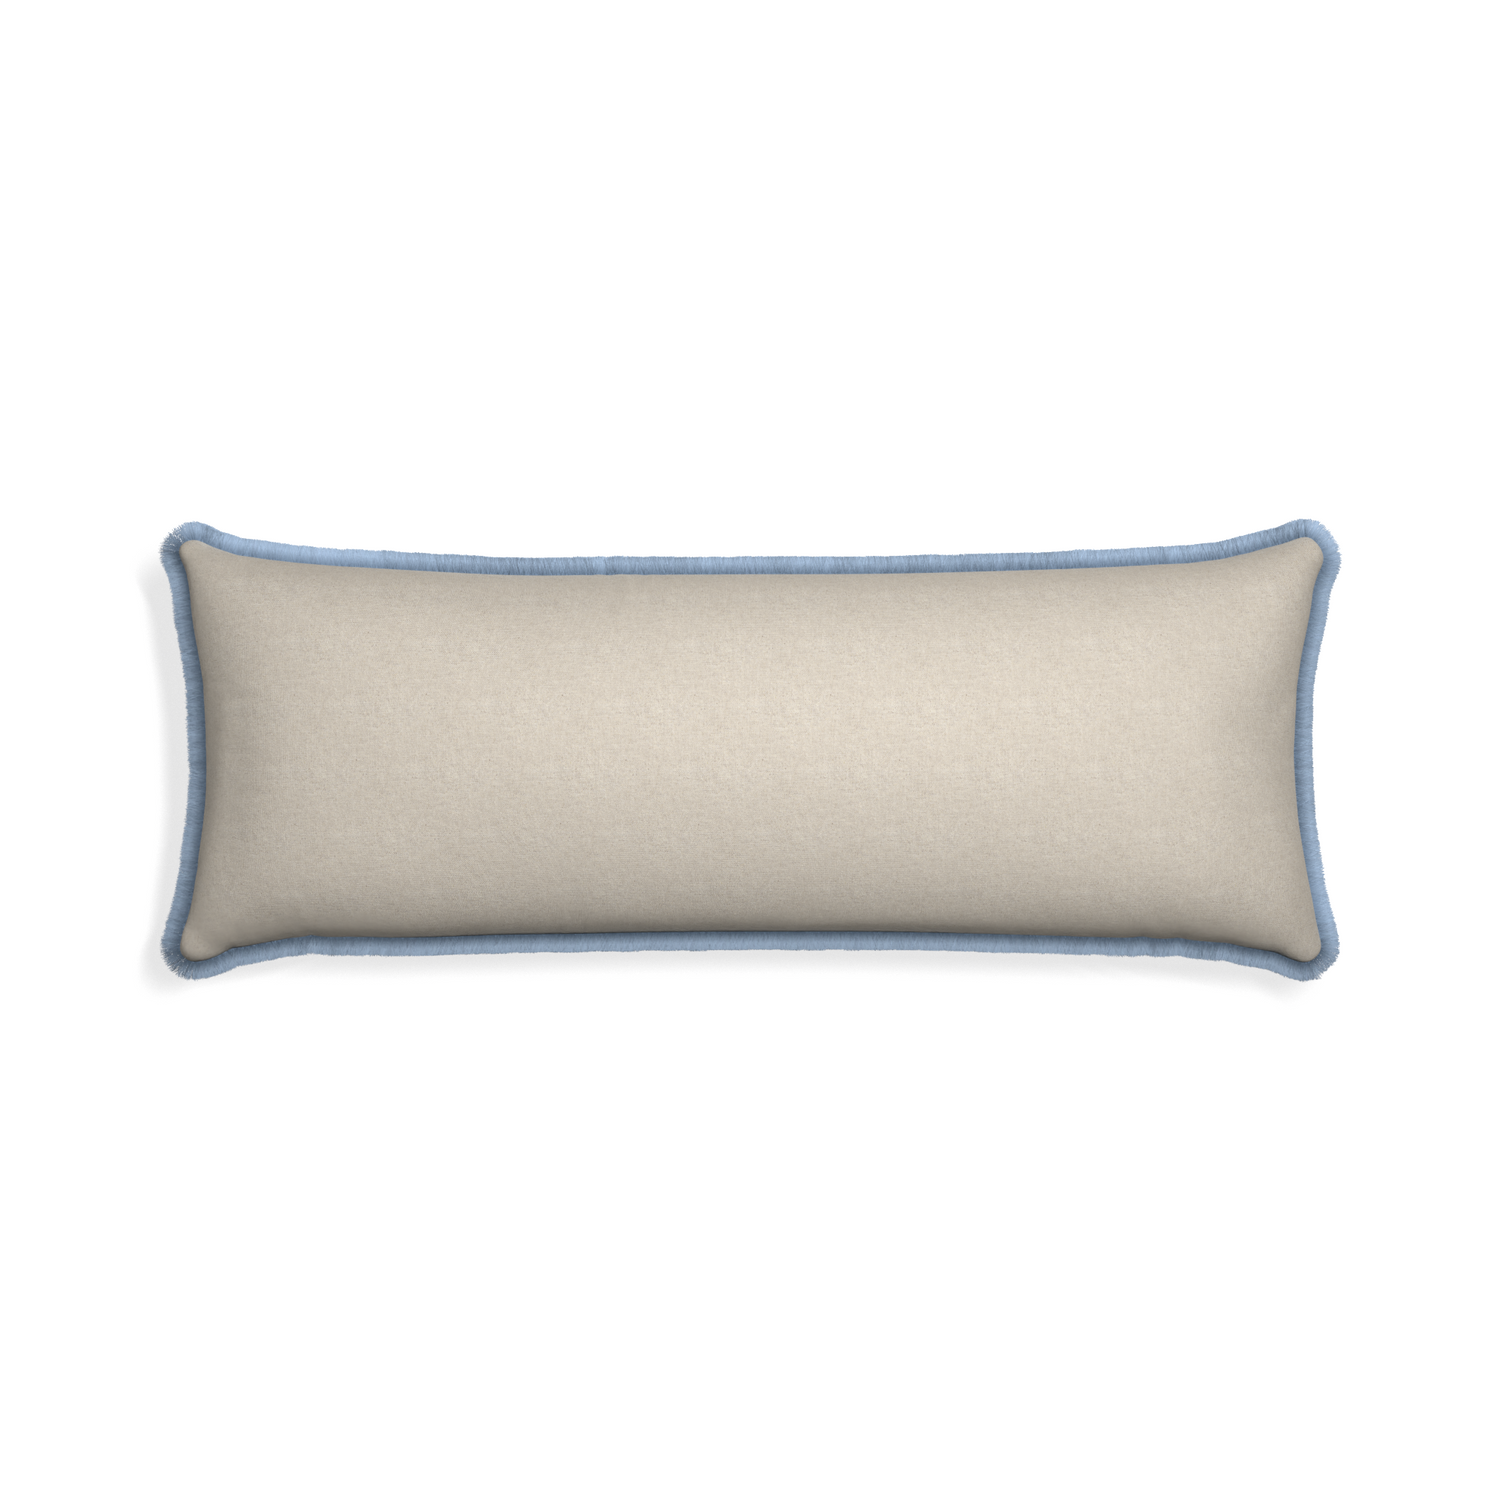 Xl-lumbar oat custom pillow with sky fringe on white background